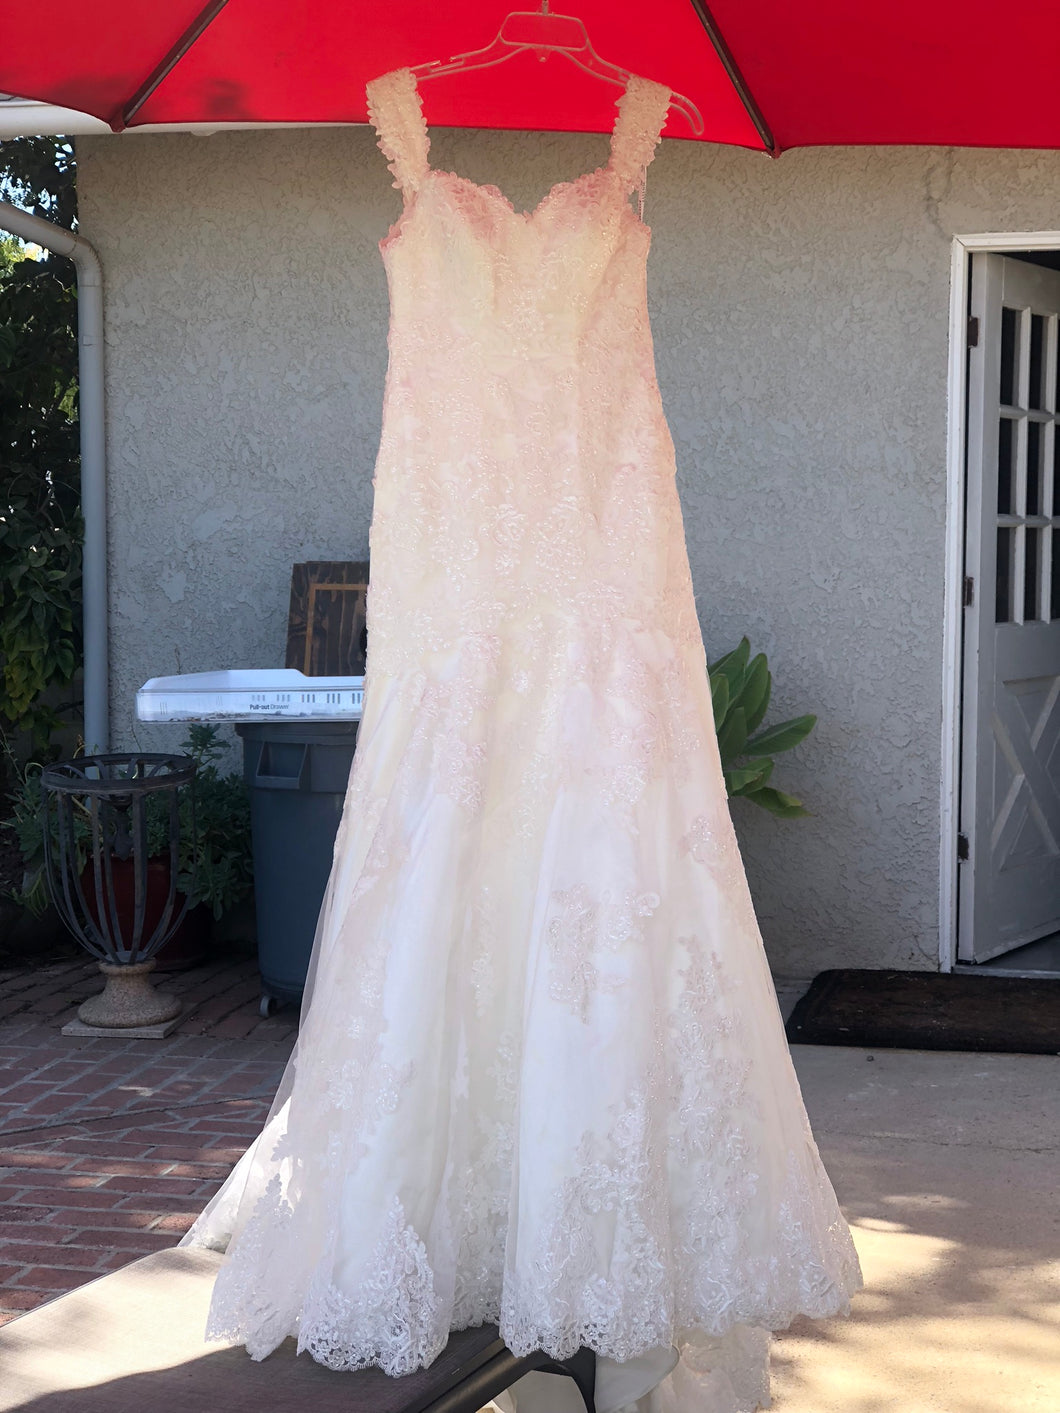 Essense of Australia 'D1617DM' size 6 new wedding dress front view on hanger